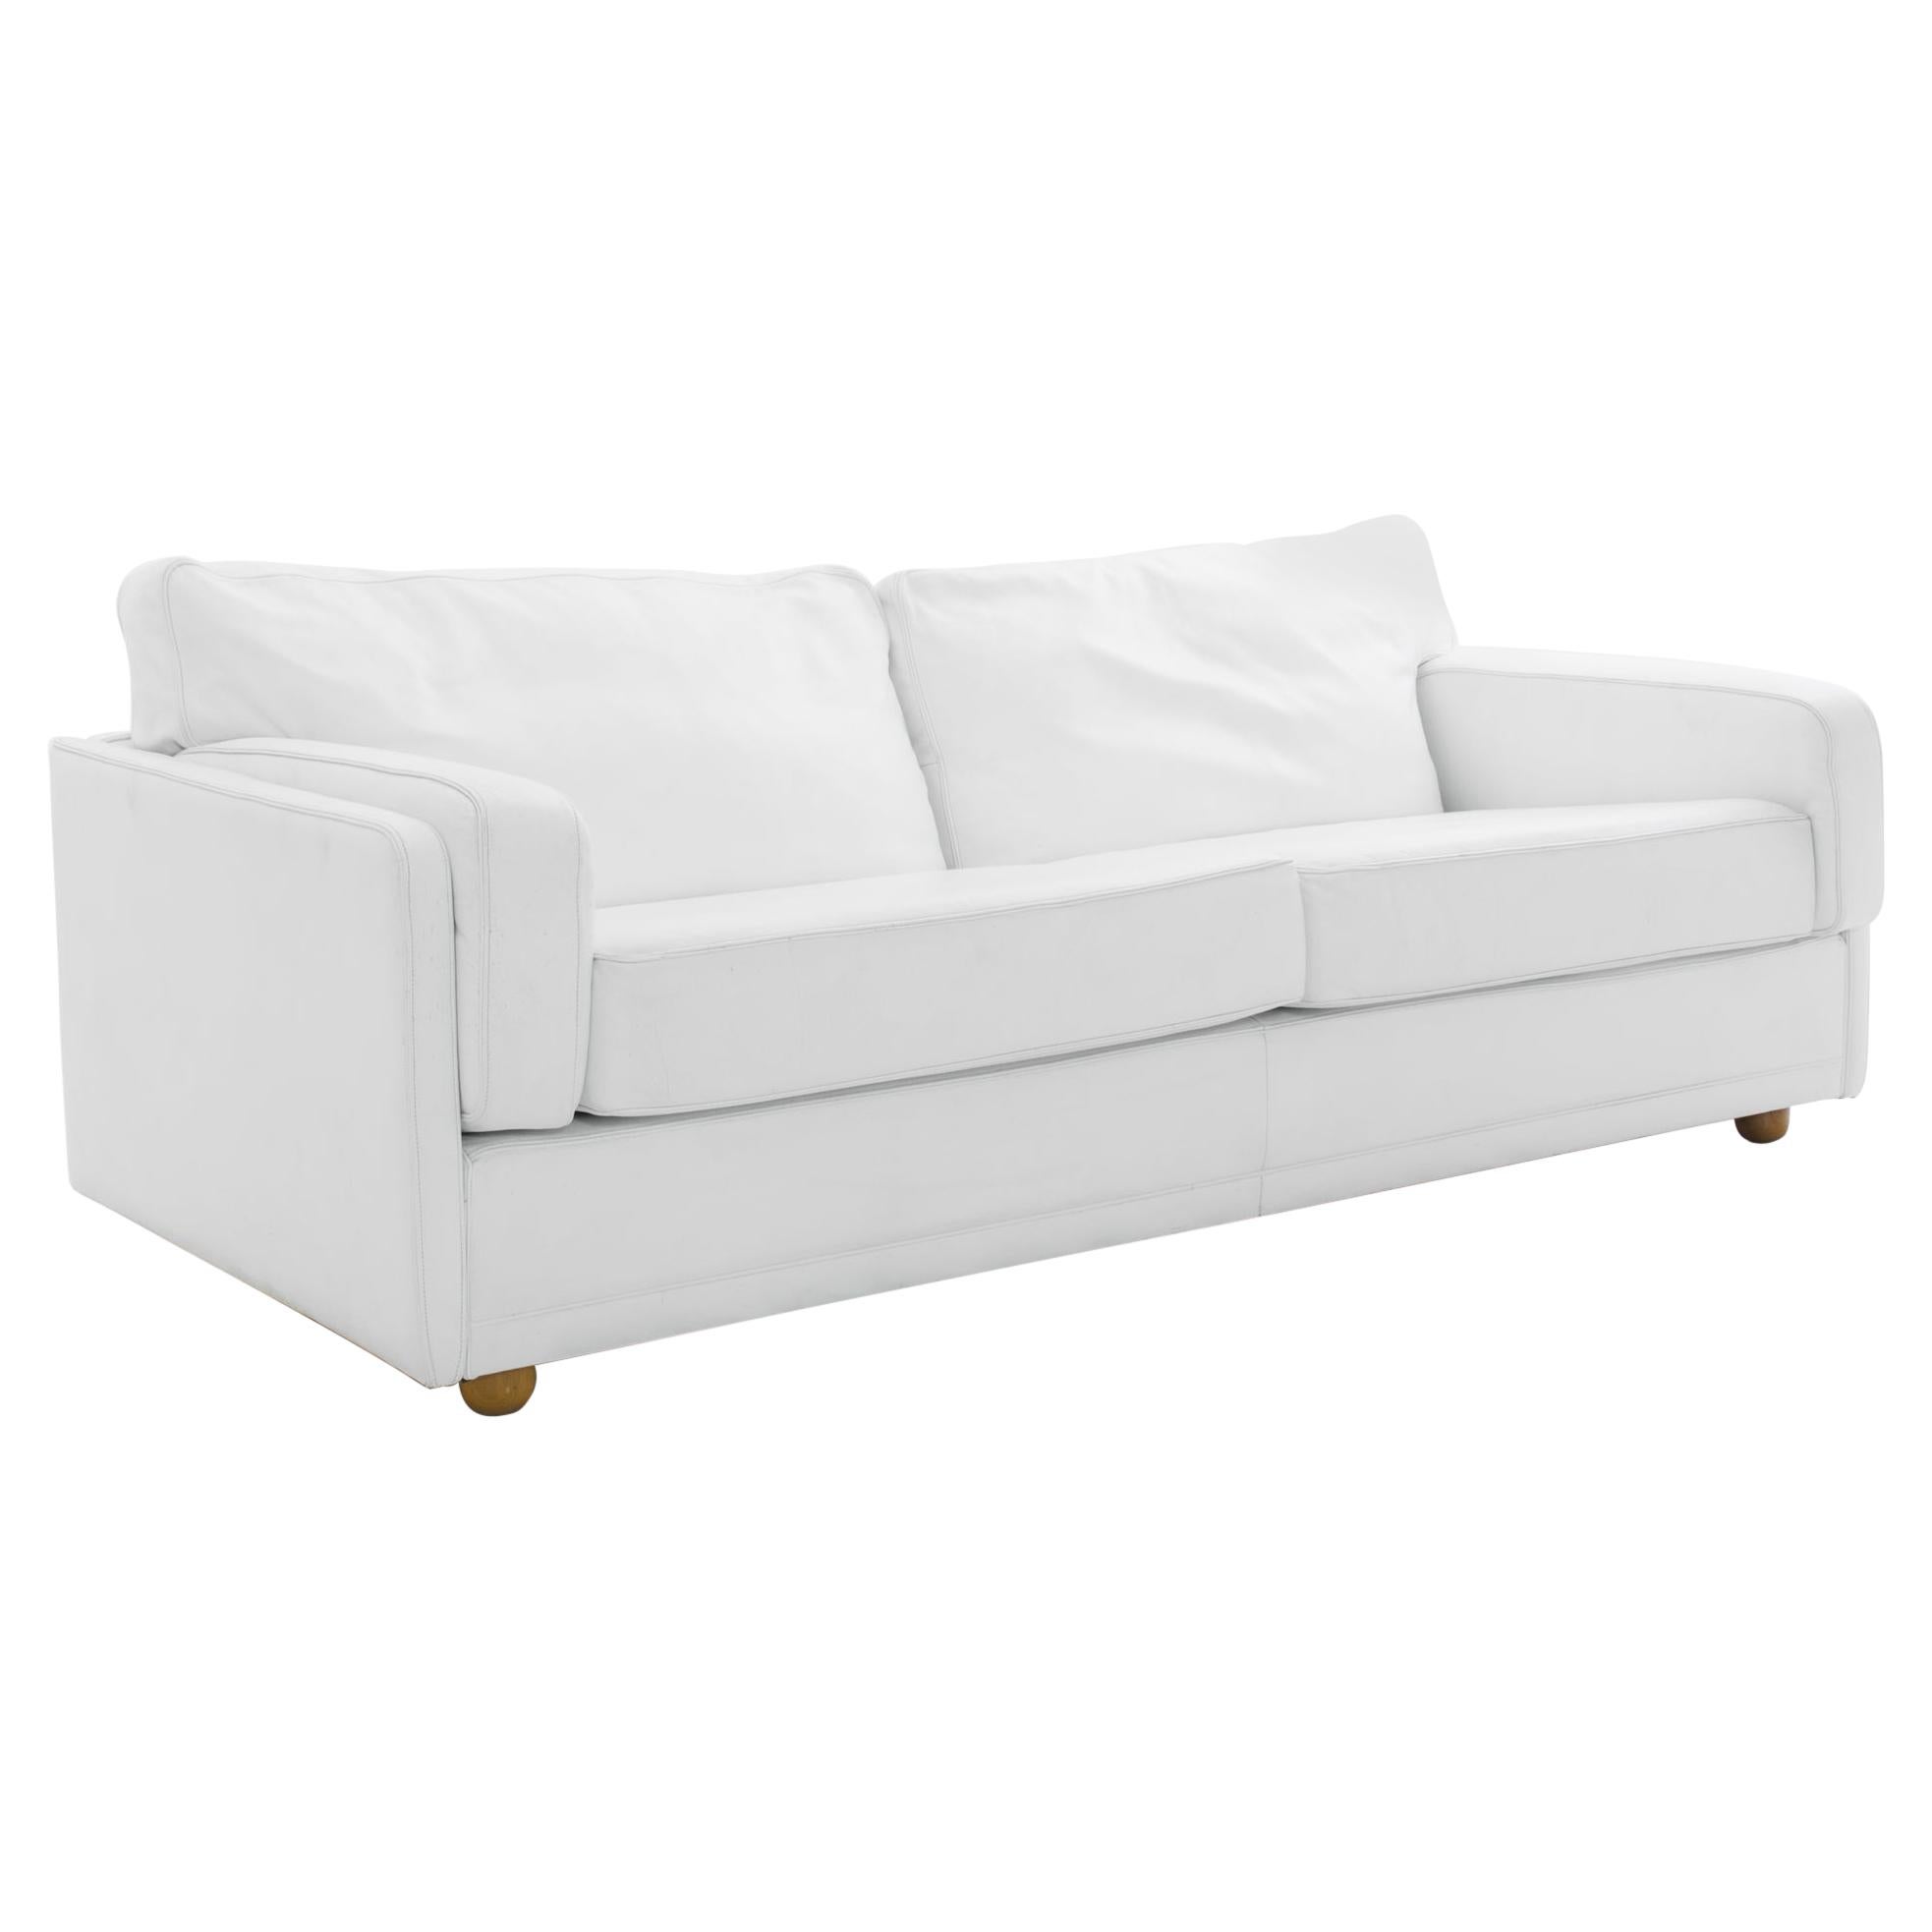 1980s Poltrona Frau White Leather Sofa  For Sale